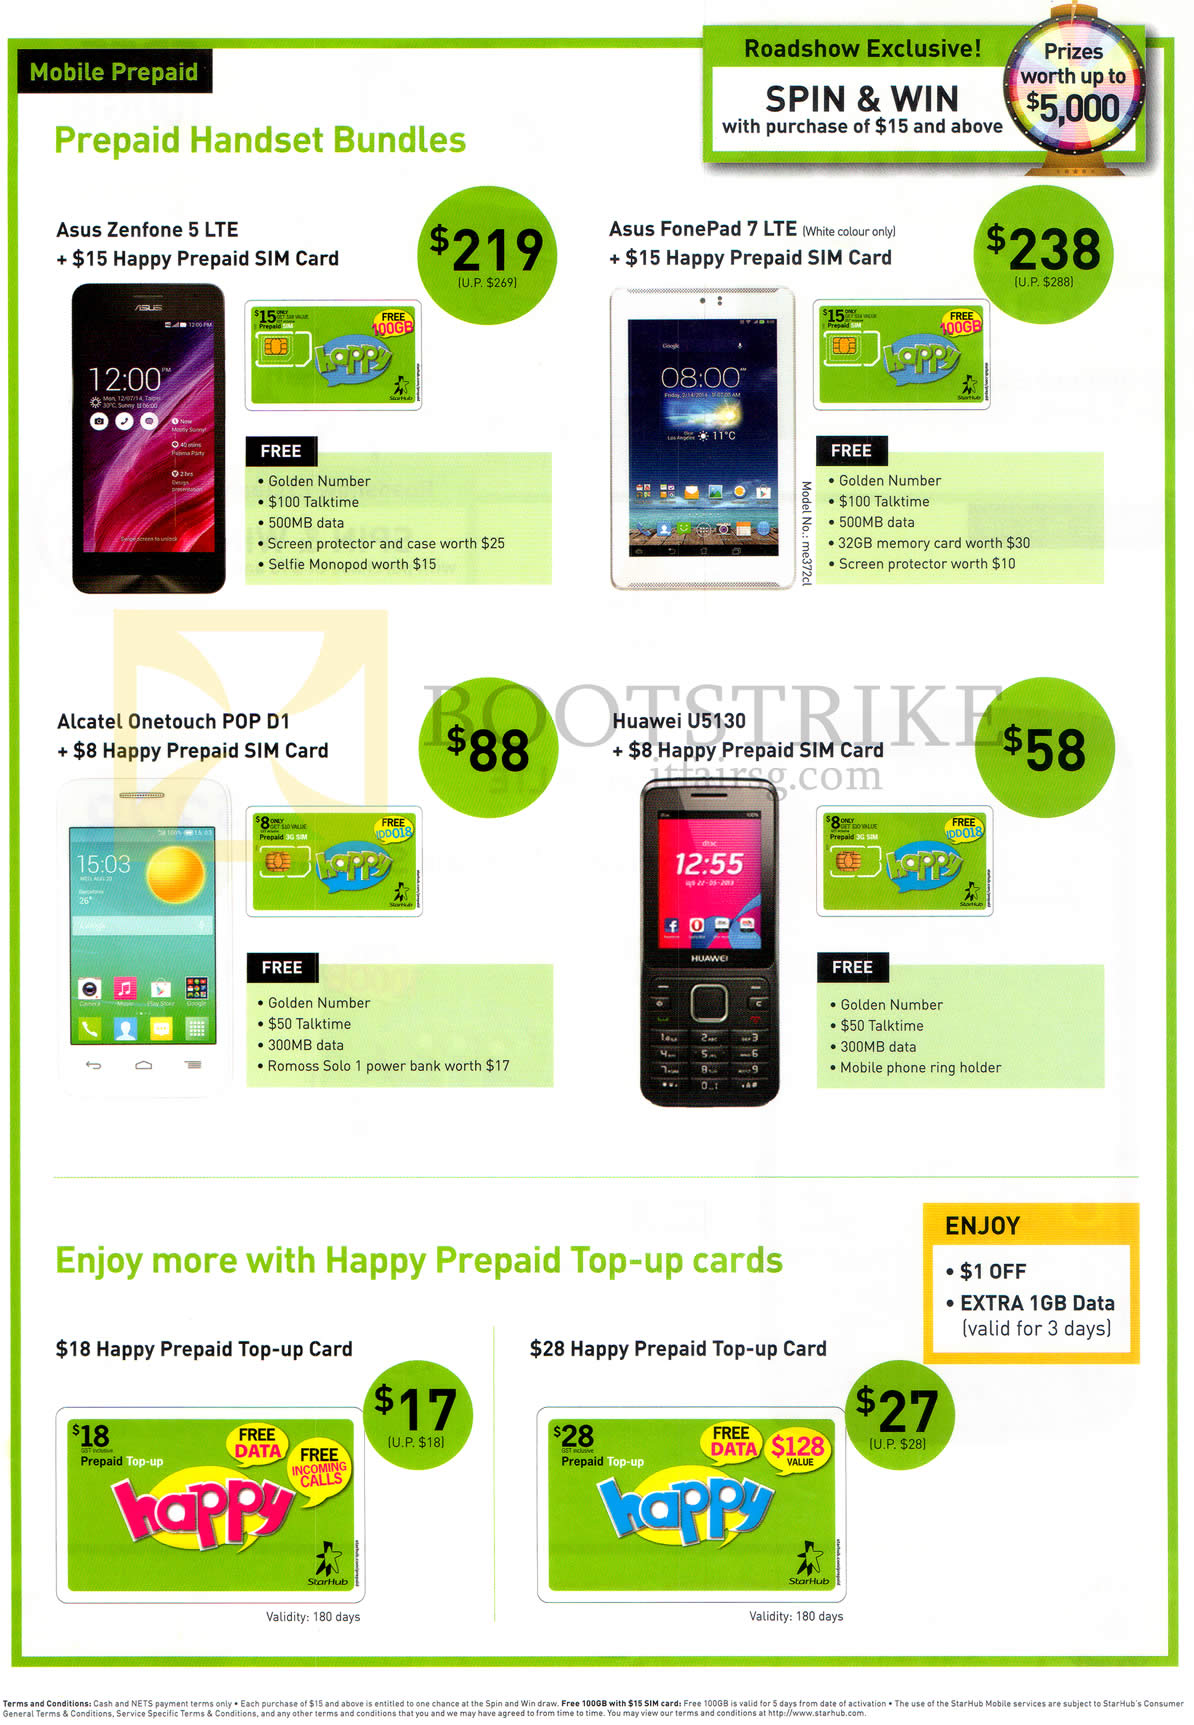 PC SHOW 2015 price list image brochure of Starhub Prepaid Handset Bundles, Top-Up Cards, Asus Zenfone 5, FonePad 7, Alcatel Onetouch Pop D1, Huawei U5130